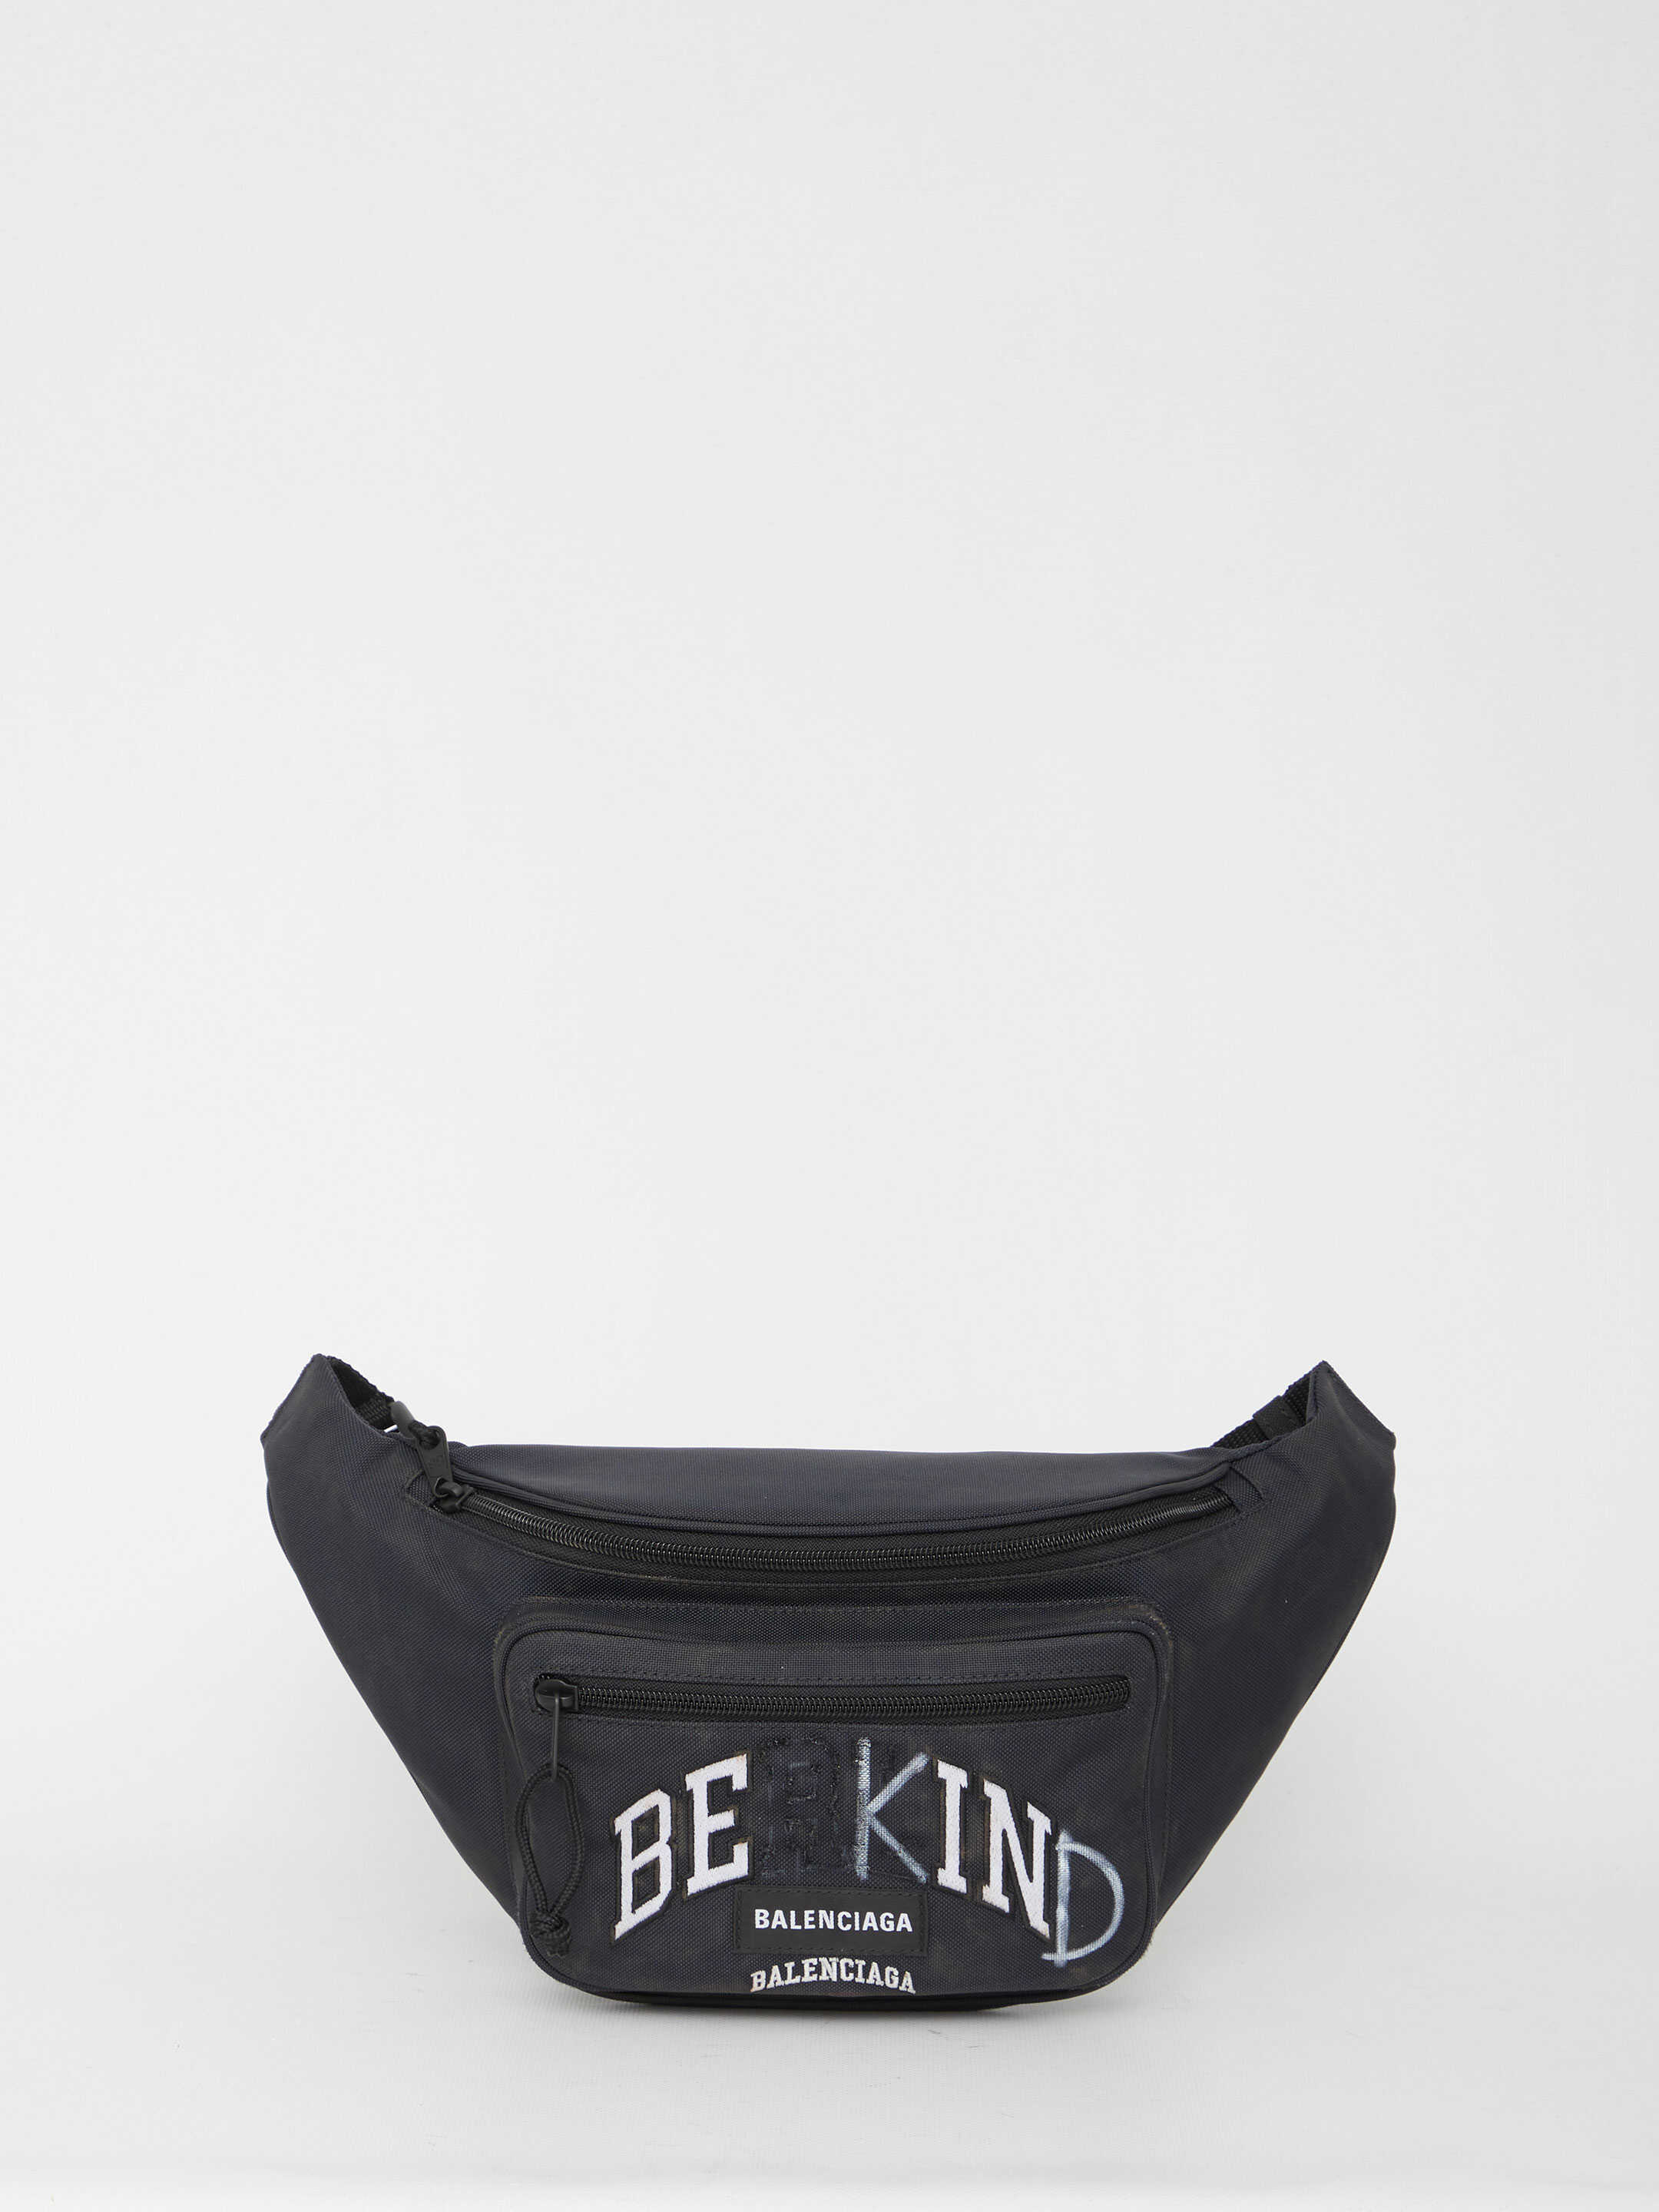 Balenciaga Explorer Be Kind Belt Bag BLACK